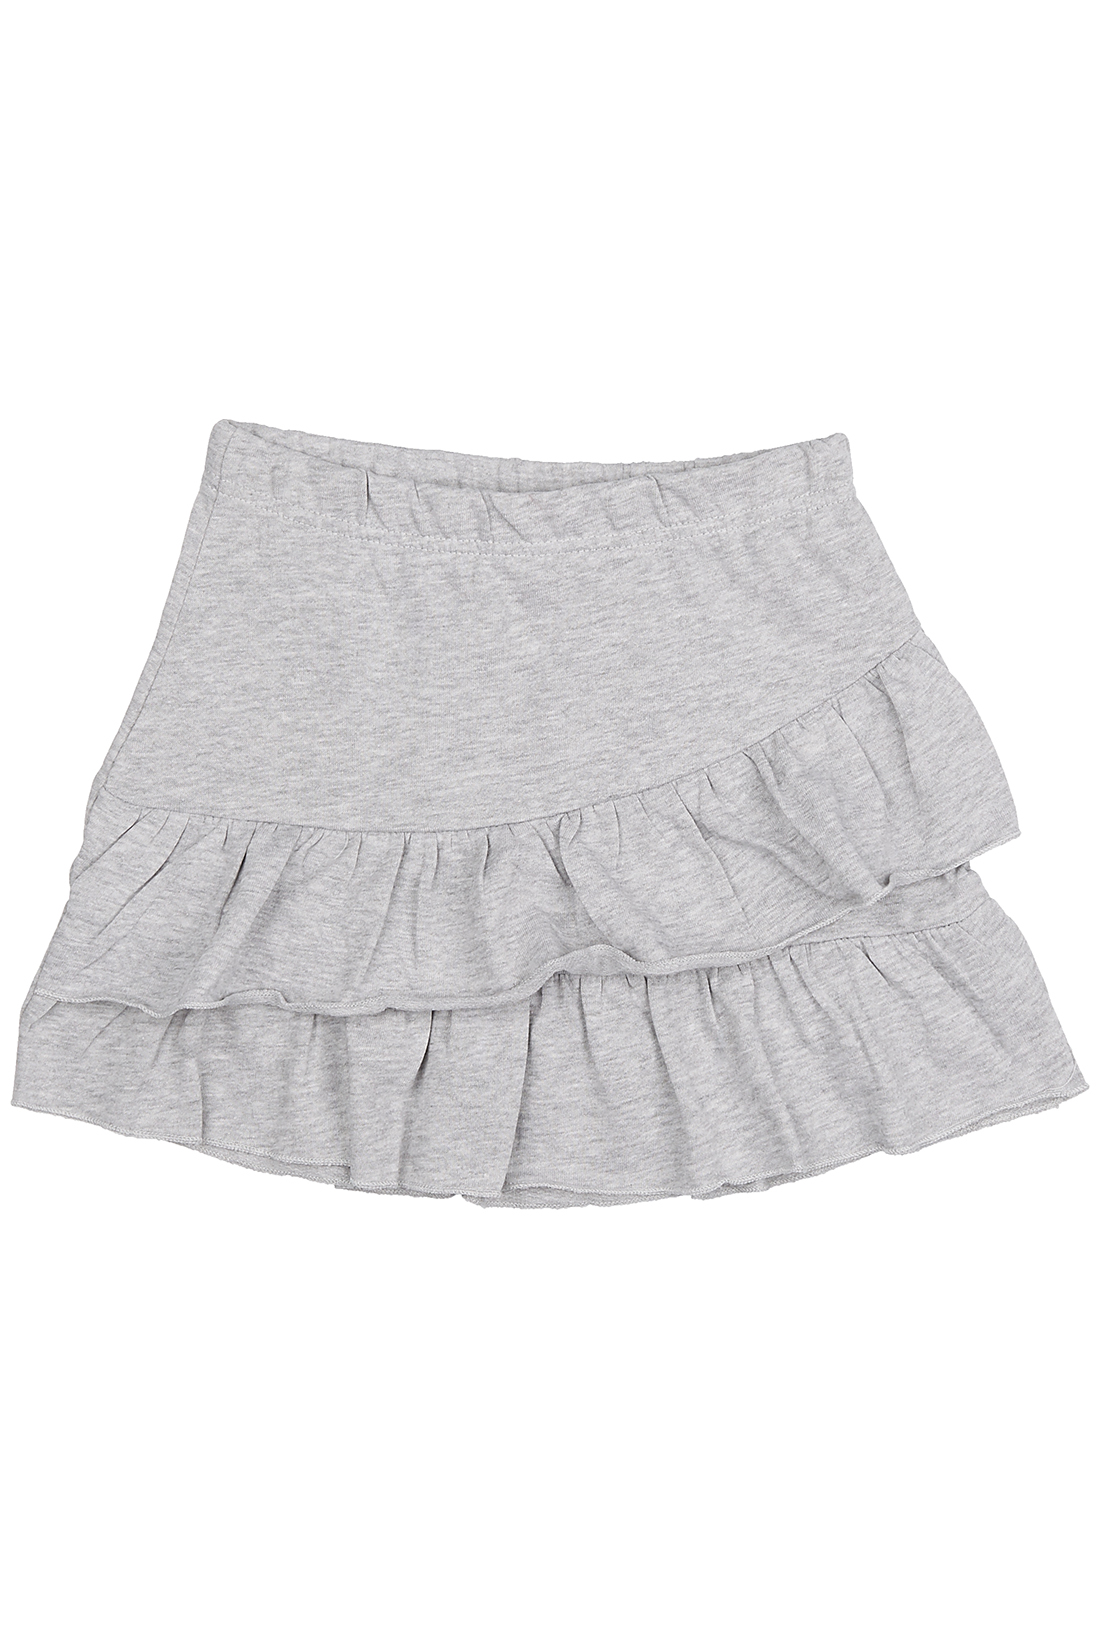 Юбка для девочки (арт. baon BJ478005), размер 158, цвет grey melange#серый Юбка для девочки (арт. baon BJ478005) - фото 4